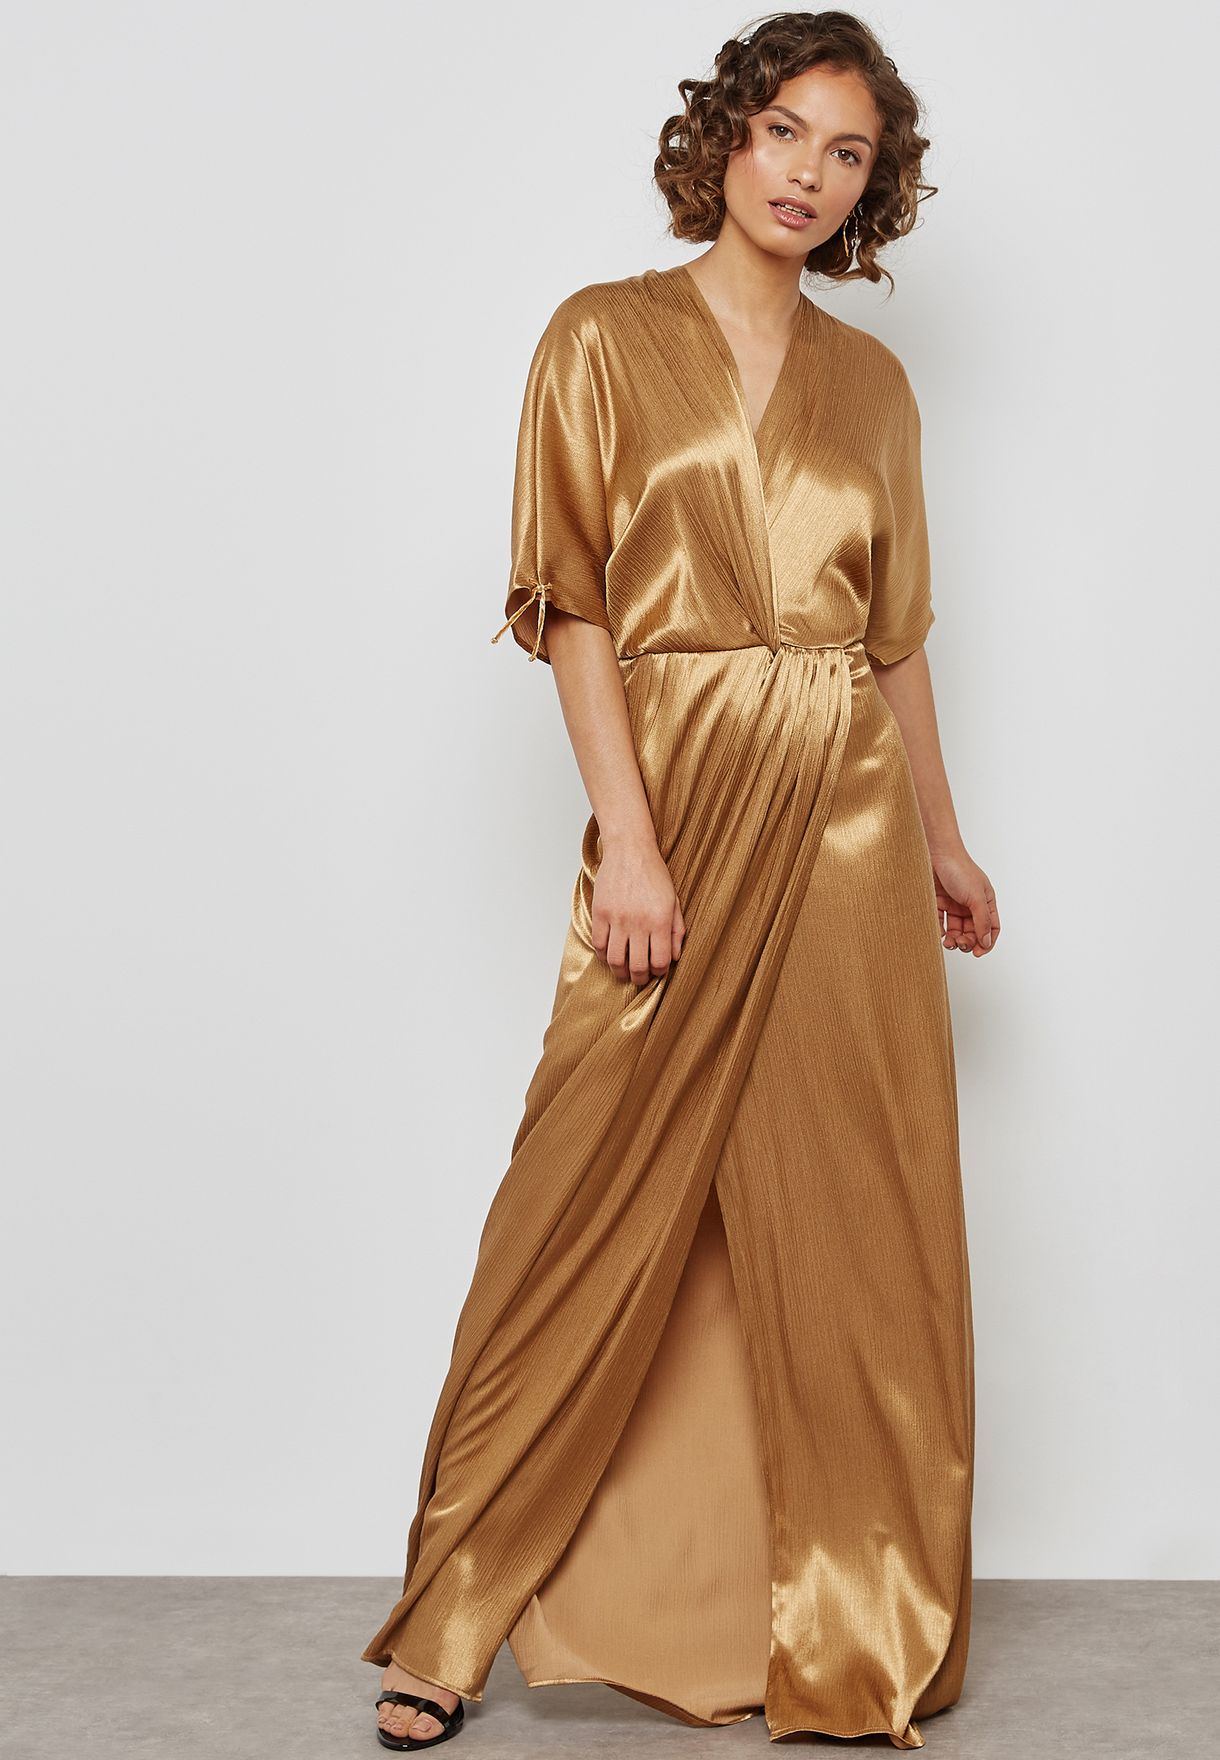 gold metallic wrap dress